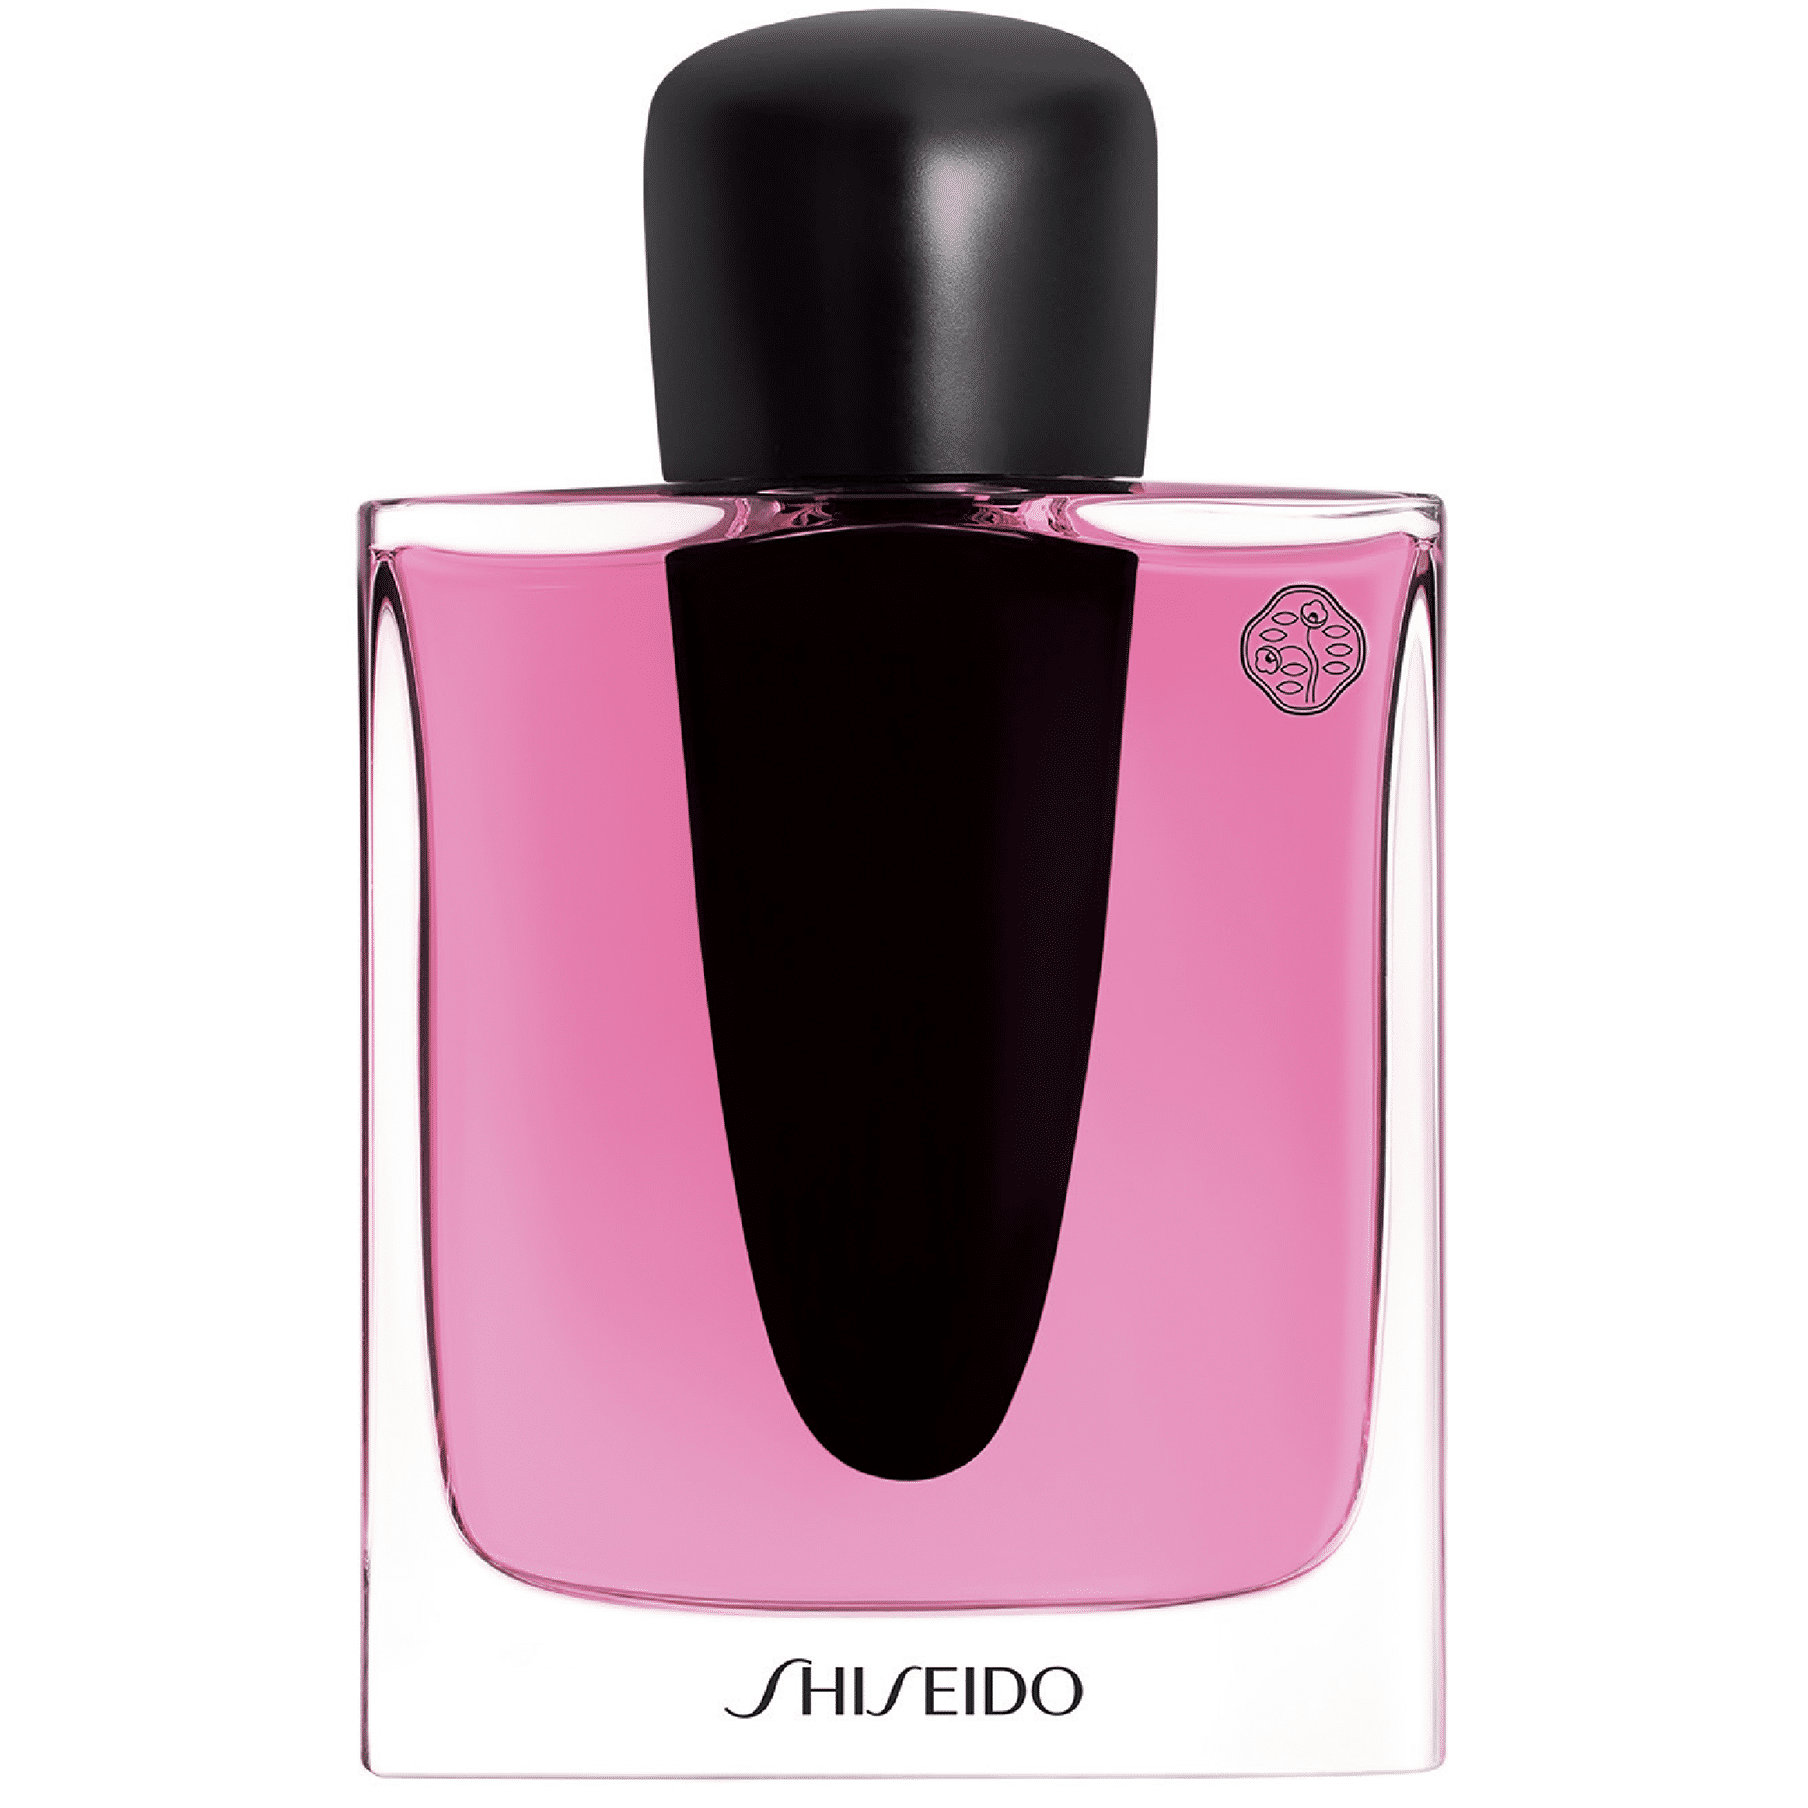 Shiseido Ginza Murasaki Eau de parfum spray 90 ml